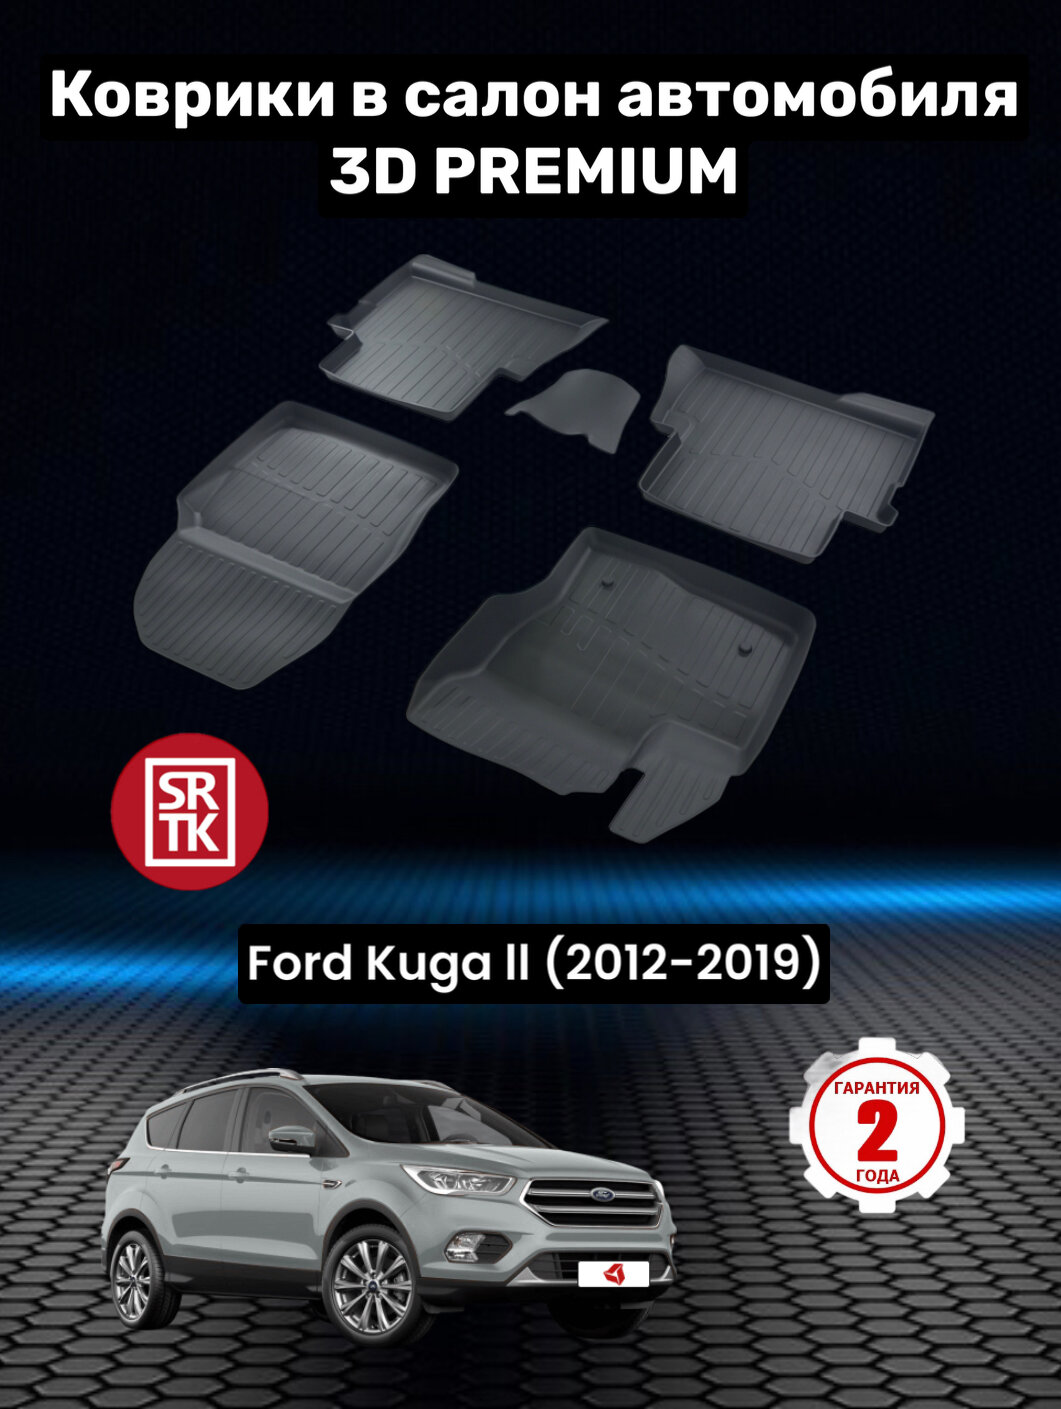 Коврики резиновые в салон для Форд Куга 2/ Ford Kuga II (2012-2019) 3D PREMIUM SRTK (Саранск) комплект в салон